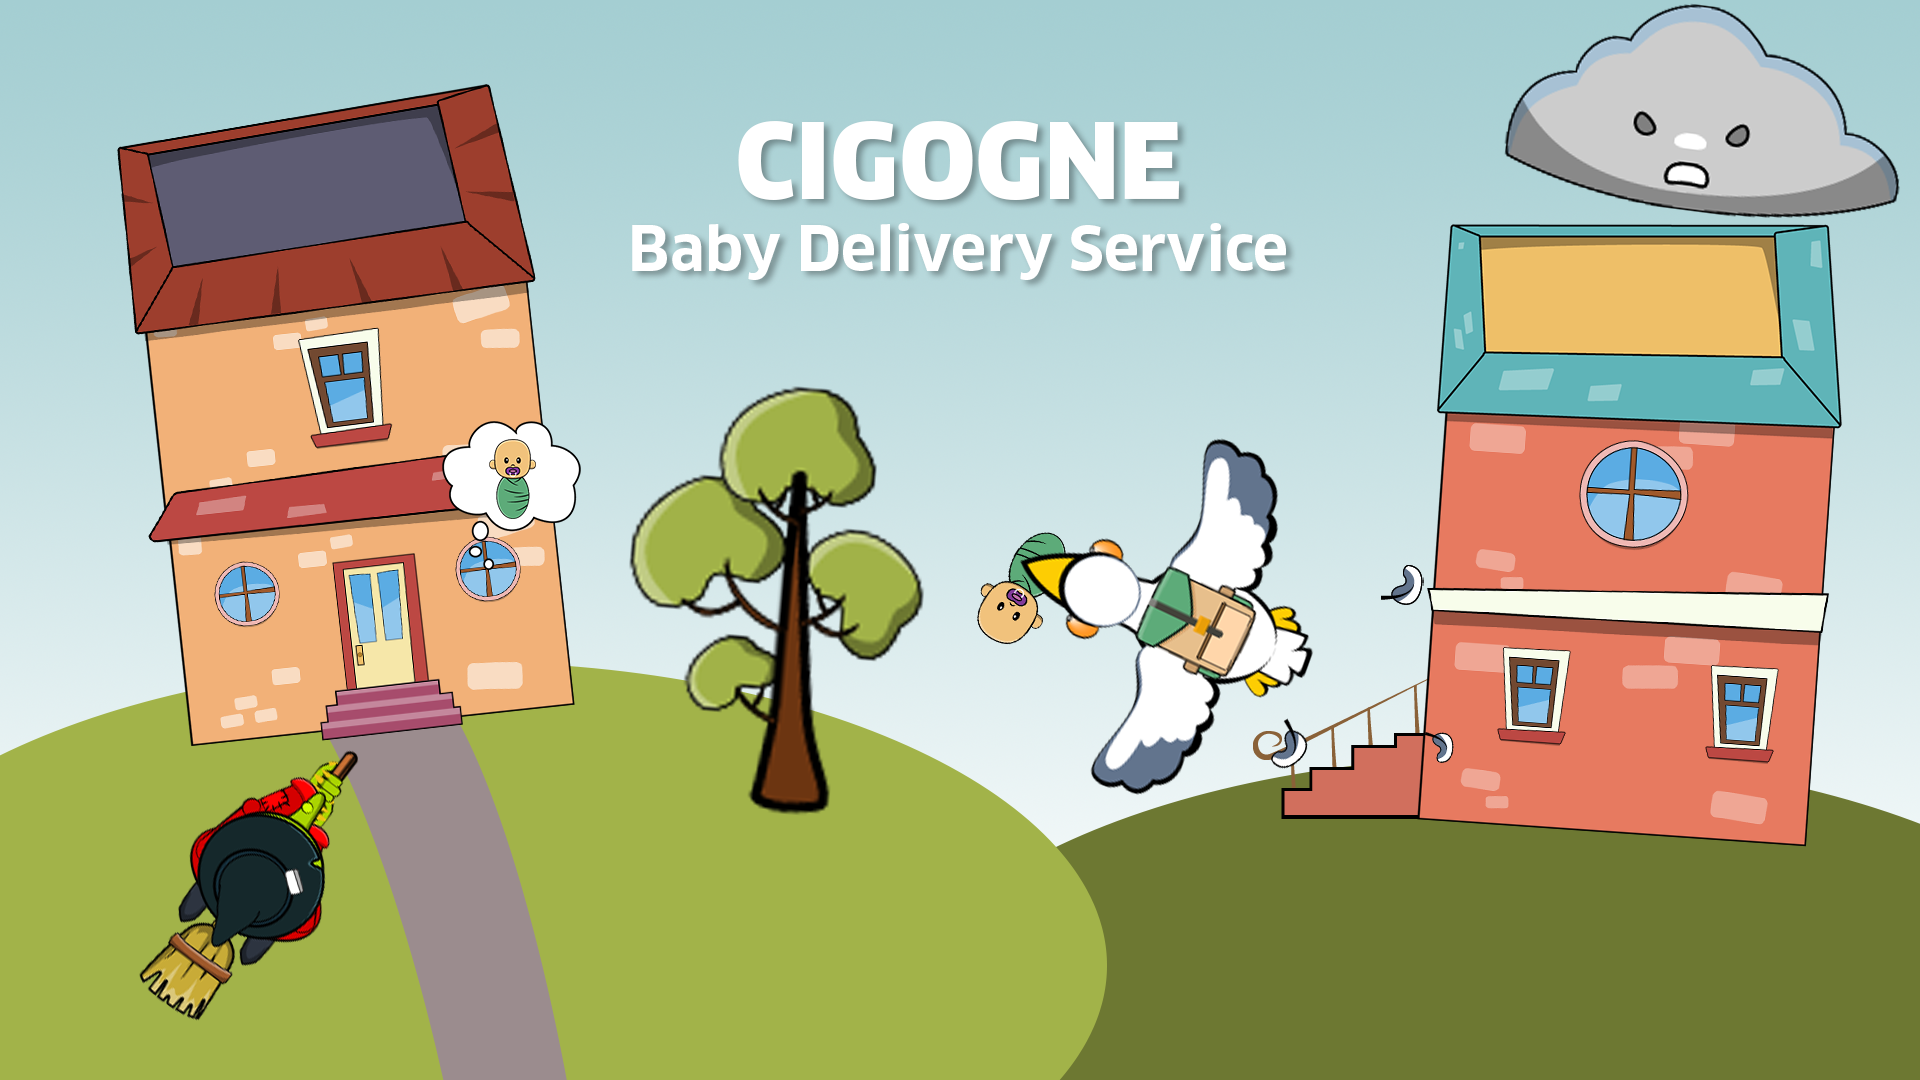 CIGOGNE : Baby Delivery Service